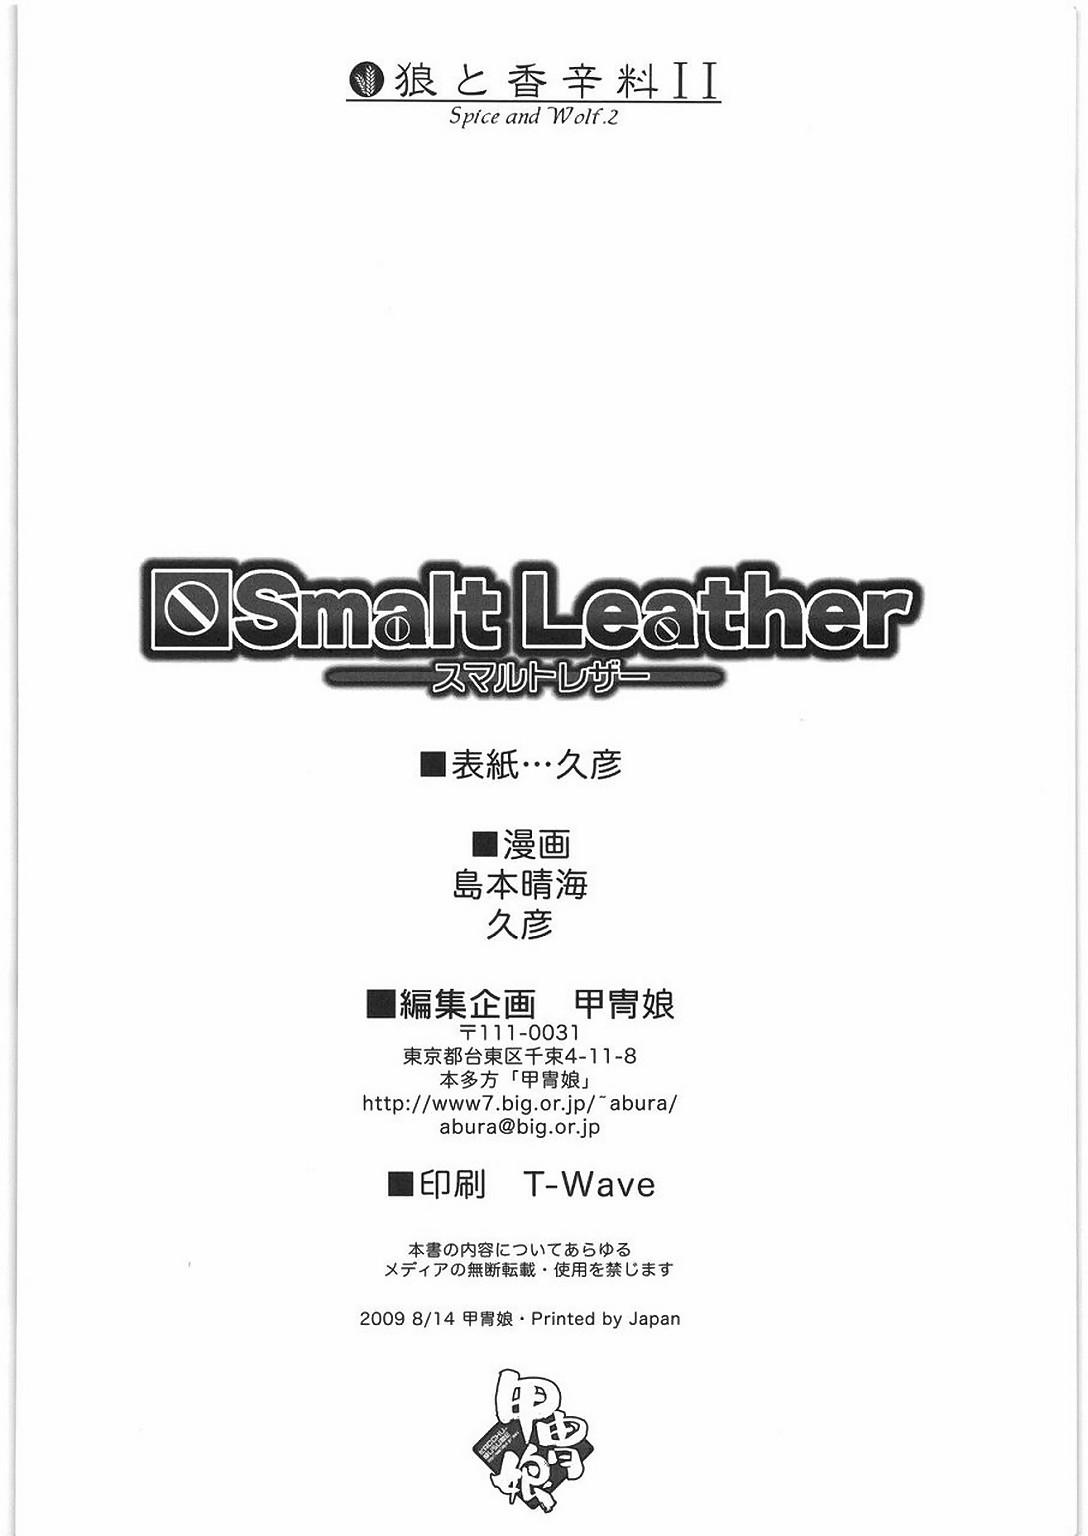 Smalt Leather 2